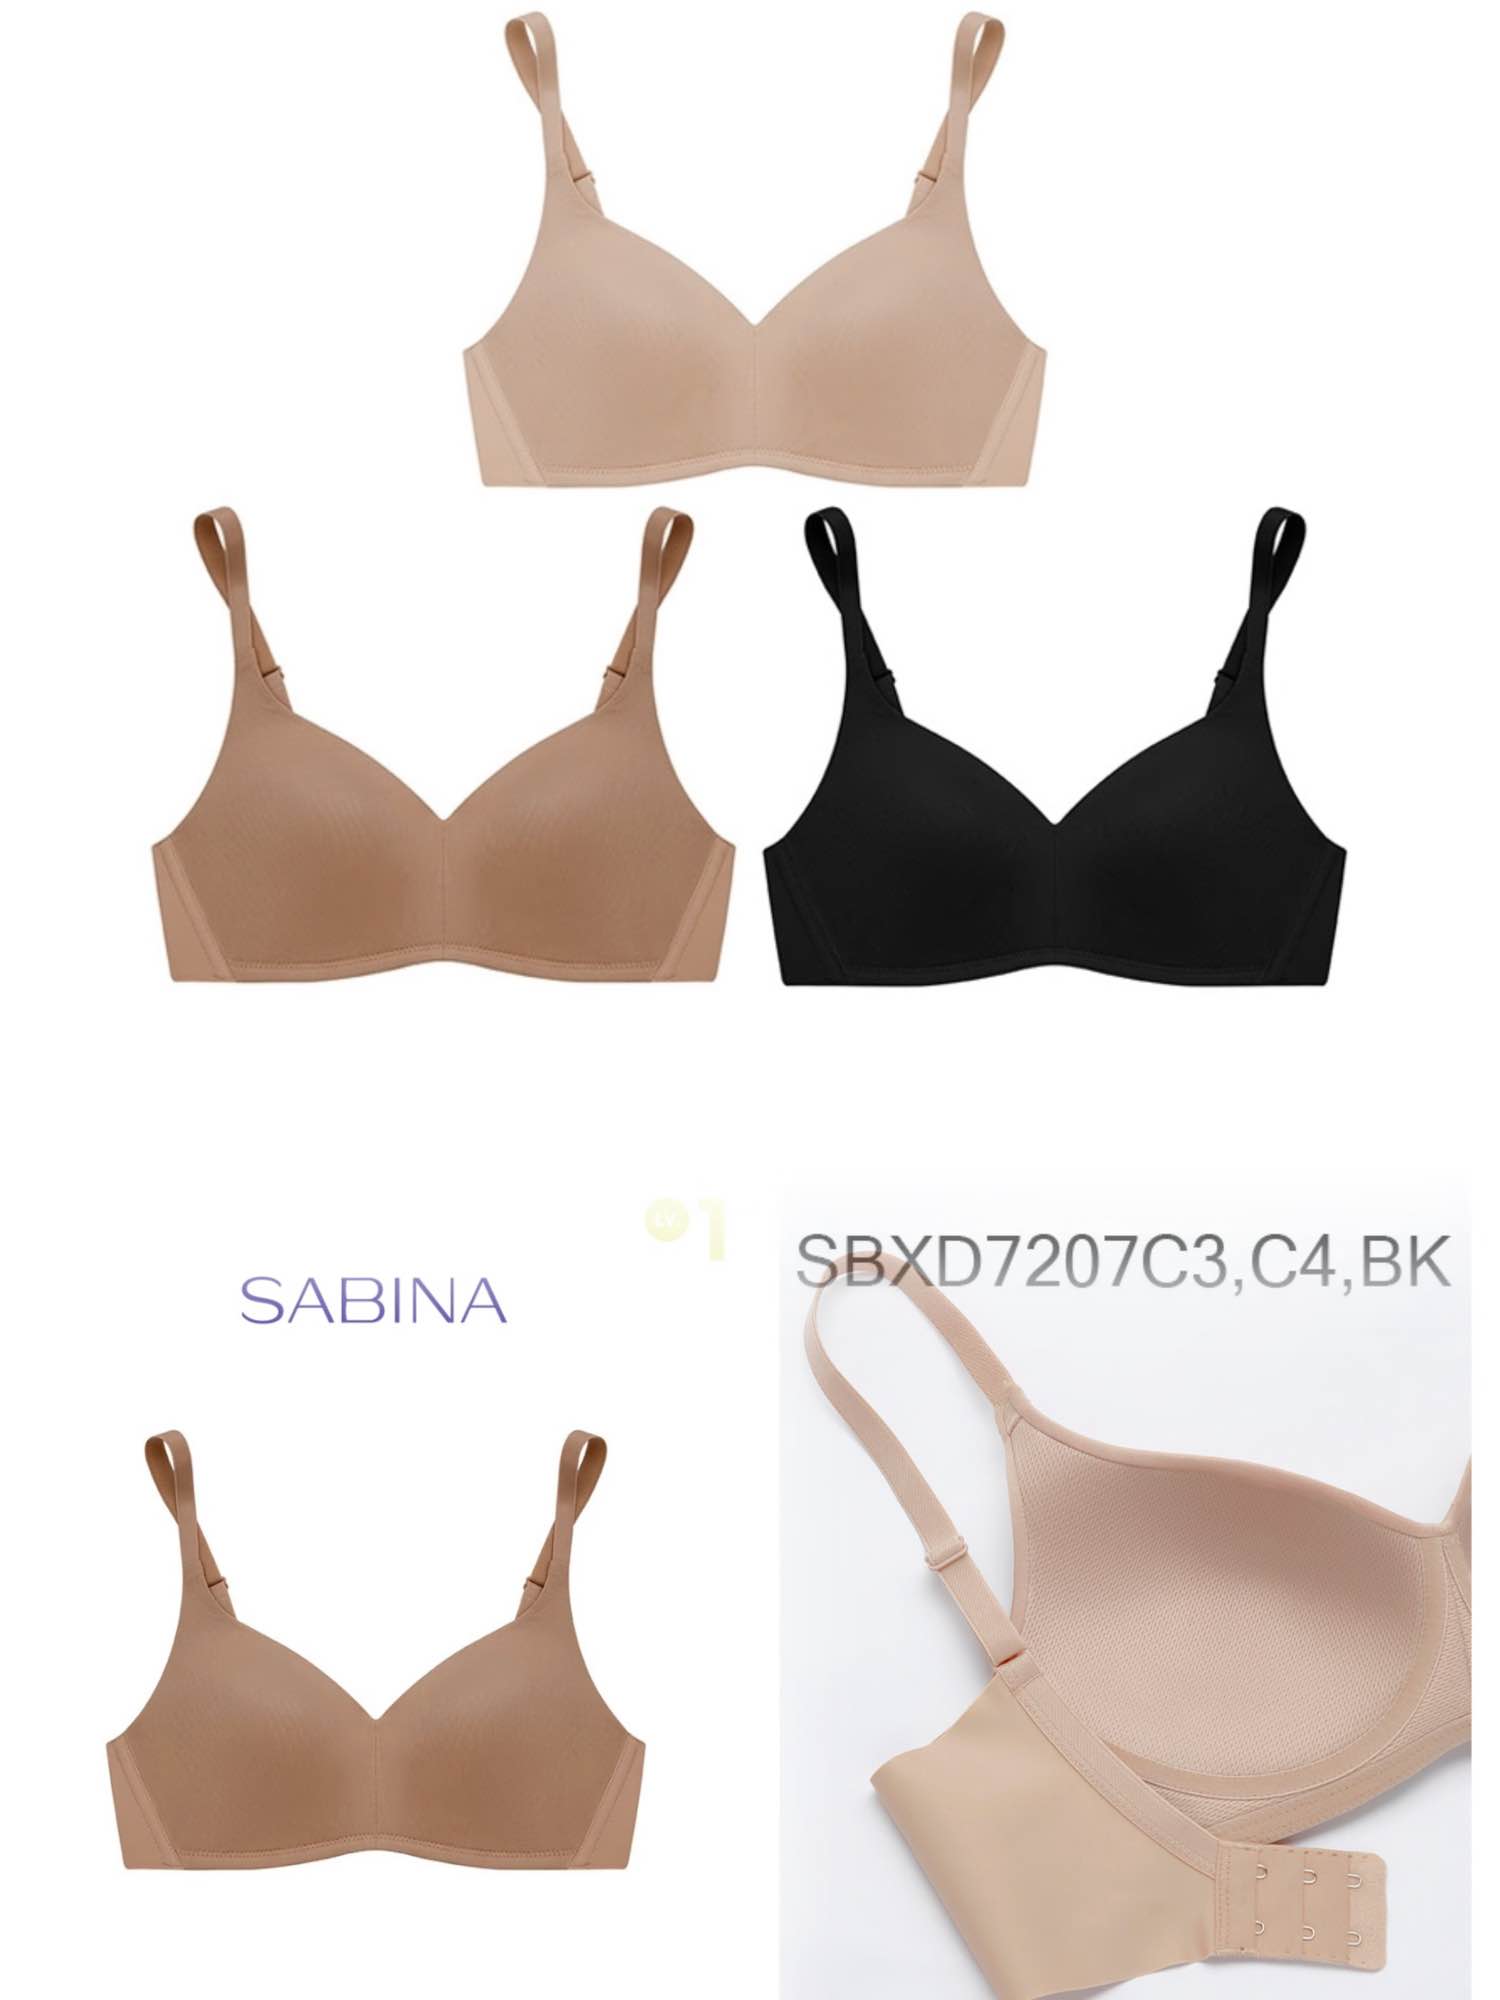 Sabina Invisible Wire Bra Sbn Sport Collection Style no. SBB1201